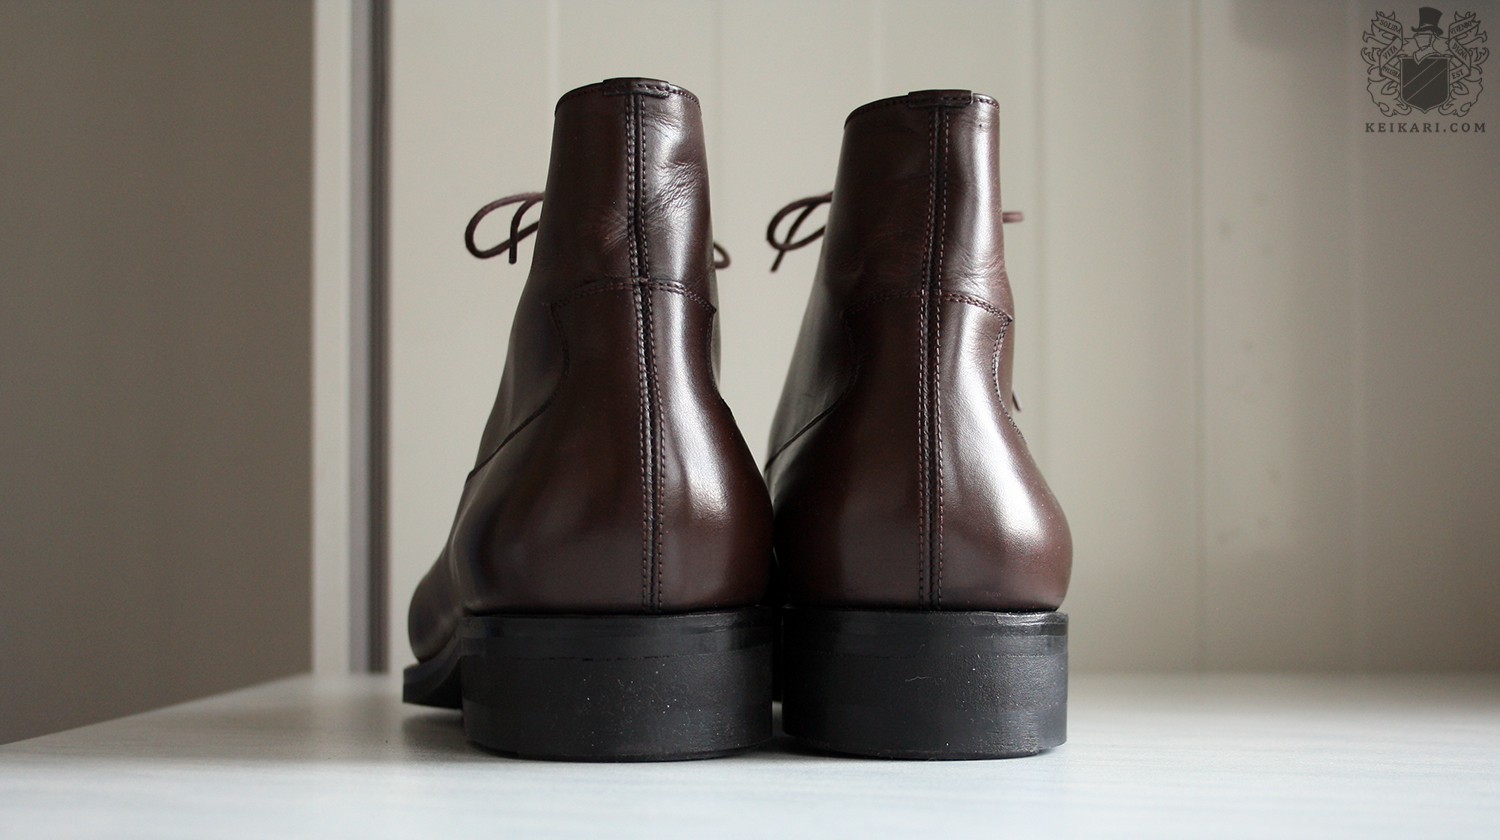 MTO_brown_calf_balmoral_boots_by_Laszlo_Vass_for_Keikari_dot_com04.jpg